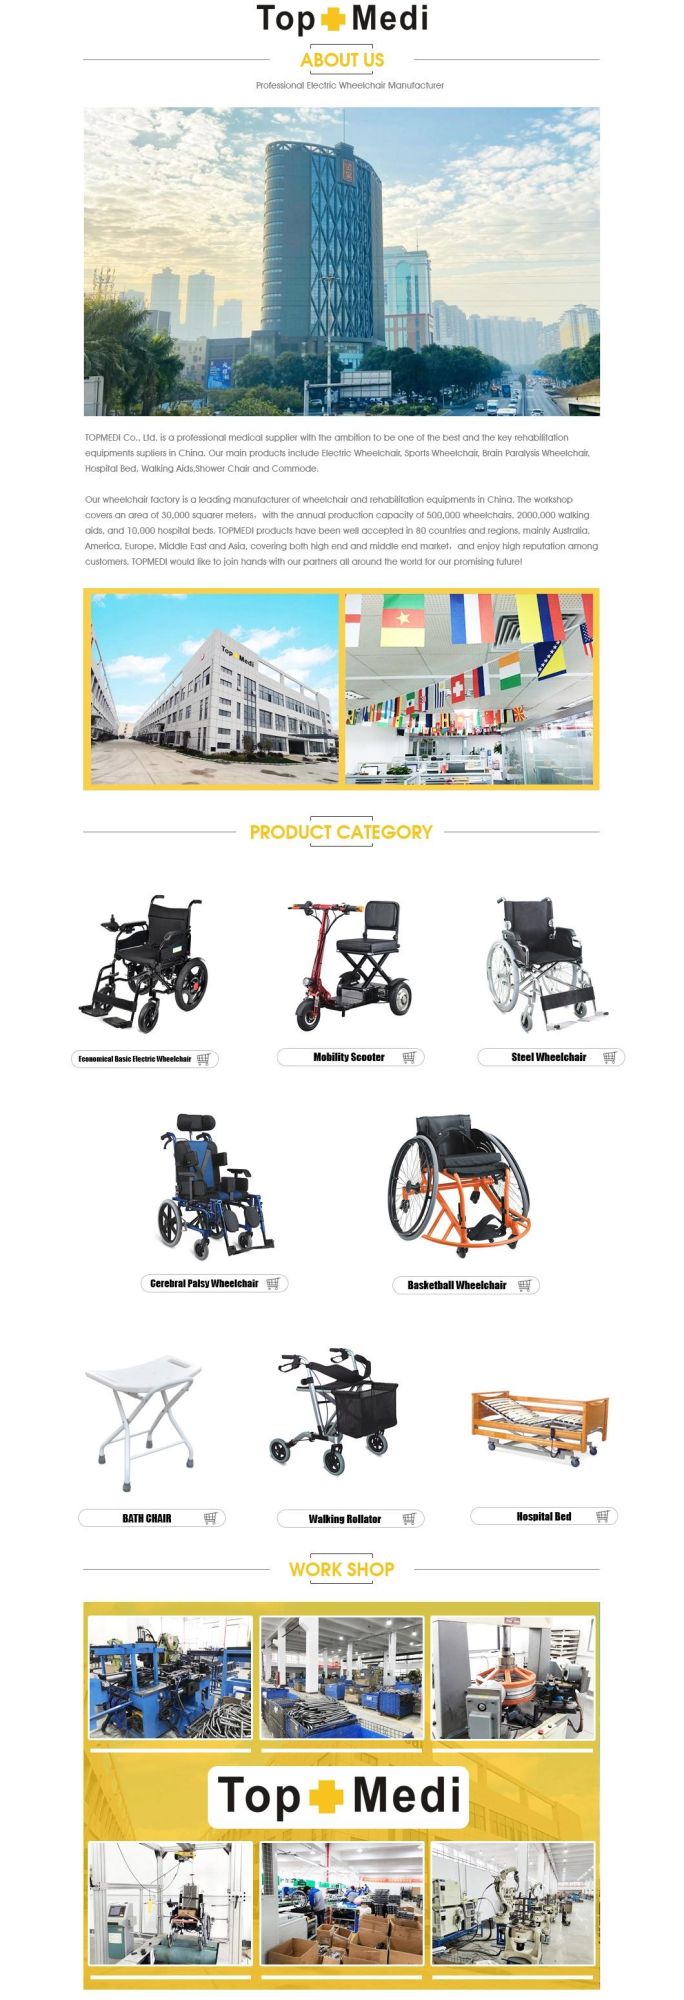 Topmedi Medical Manual Steel Wheelchair with Detachable Armrest